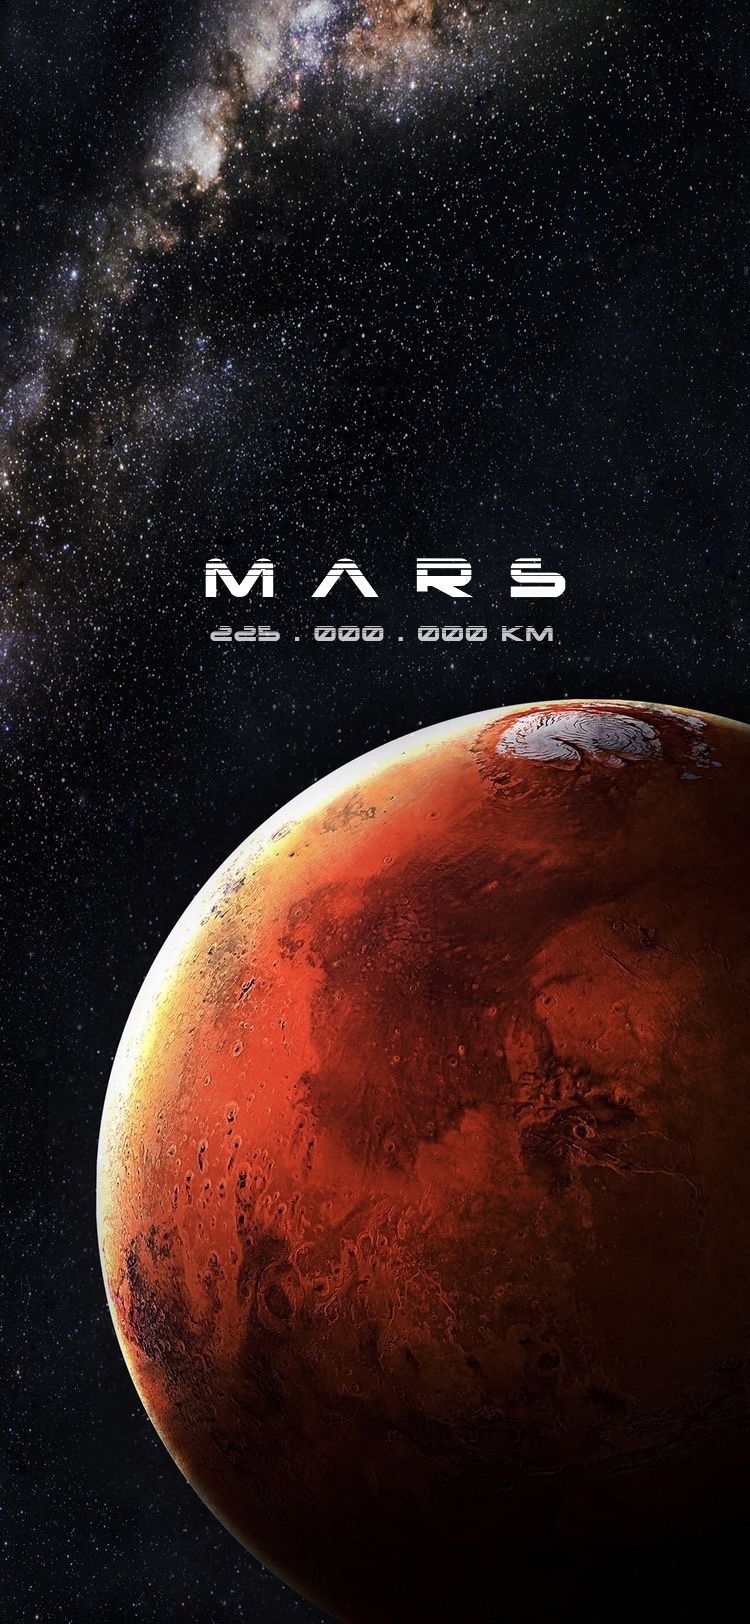 Mars iPhone Wallpaper distance Planet. Foto nasa, Gambar luar angkasa, Ruang angkasa